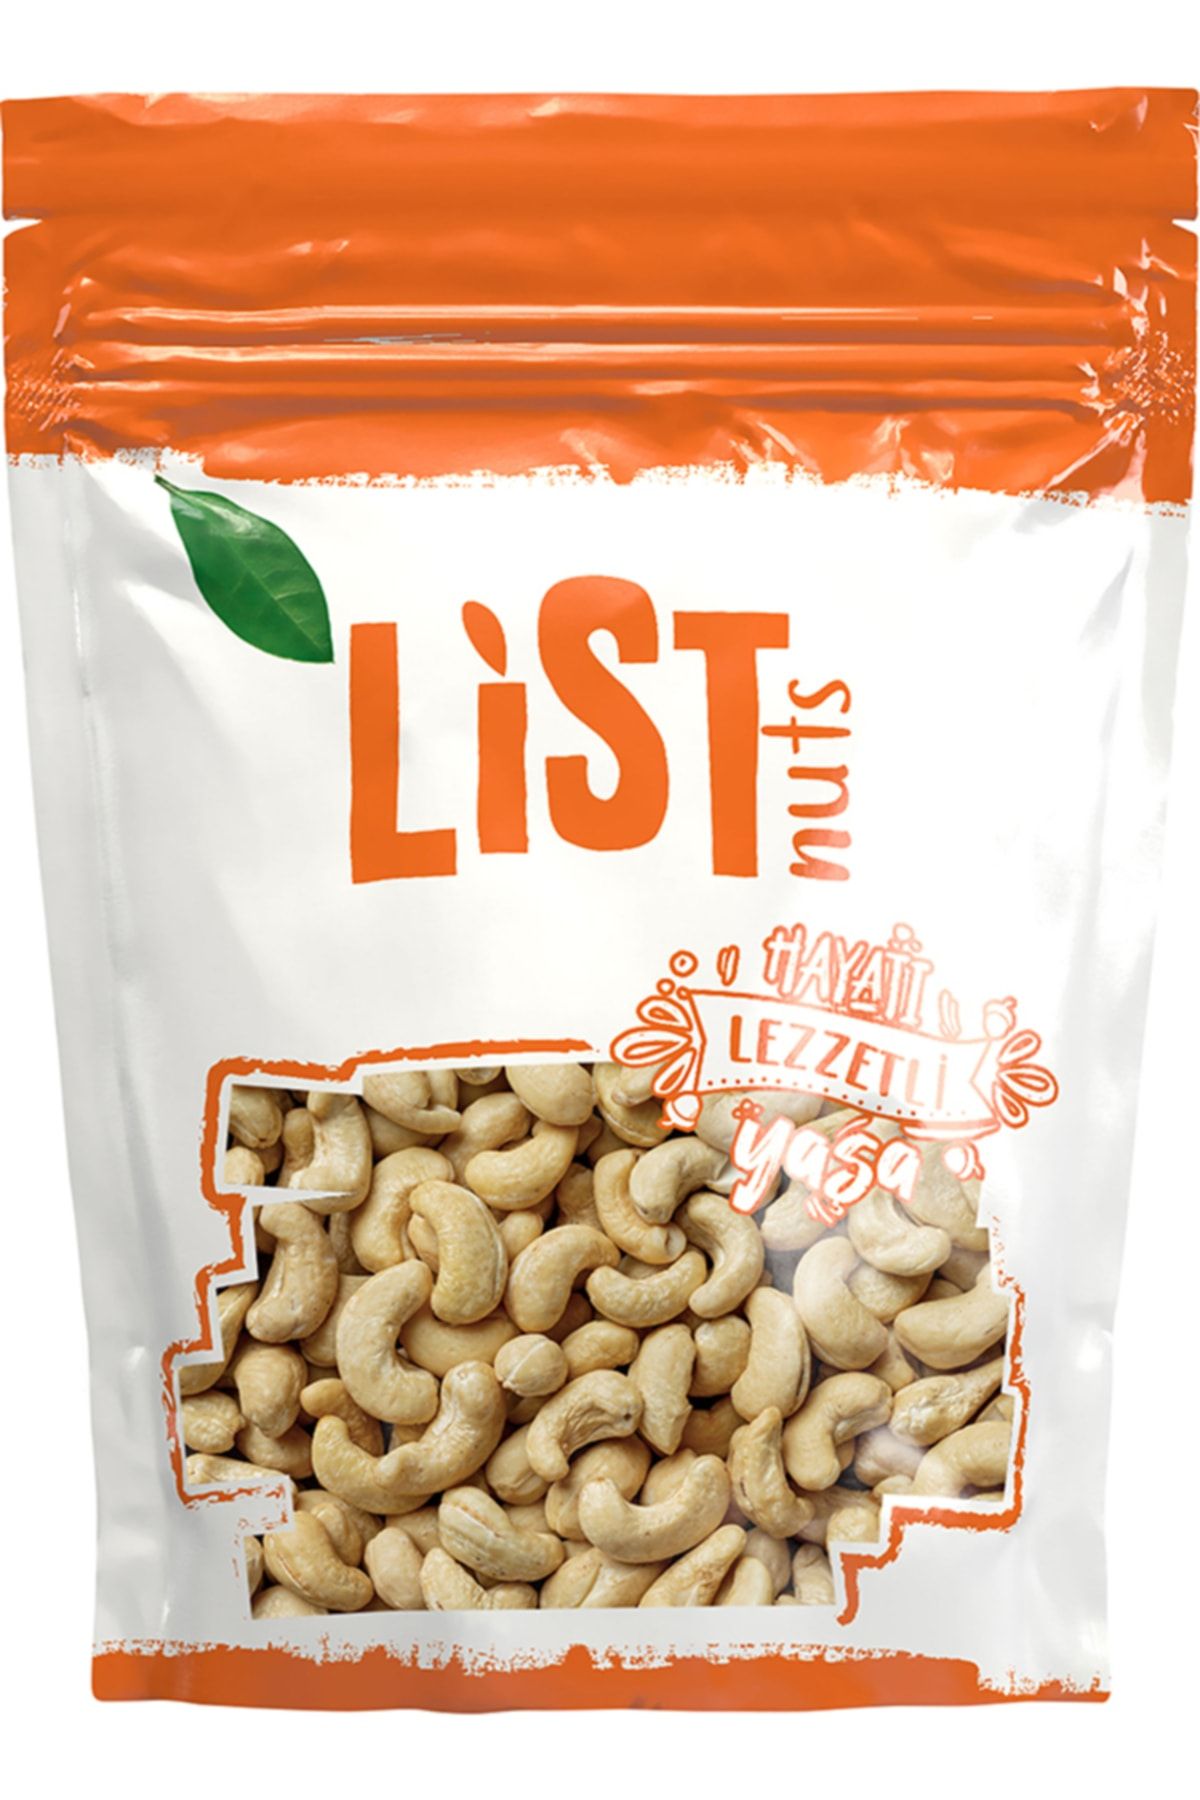 List Nuts Çiğ Kaju 1 kg